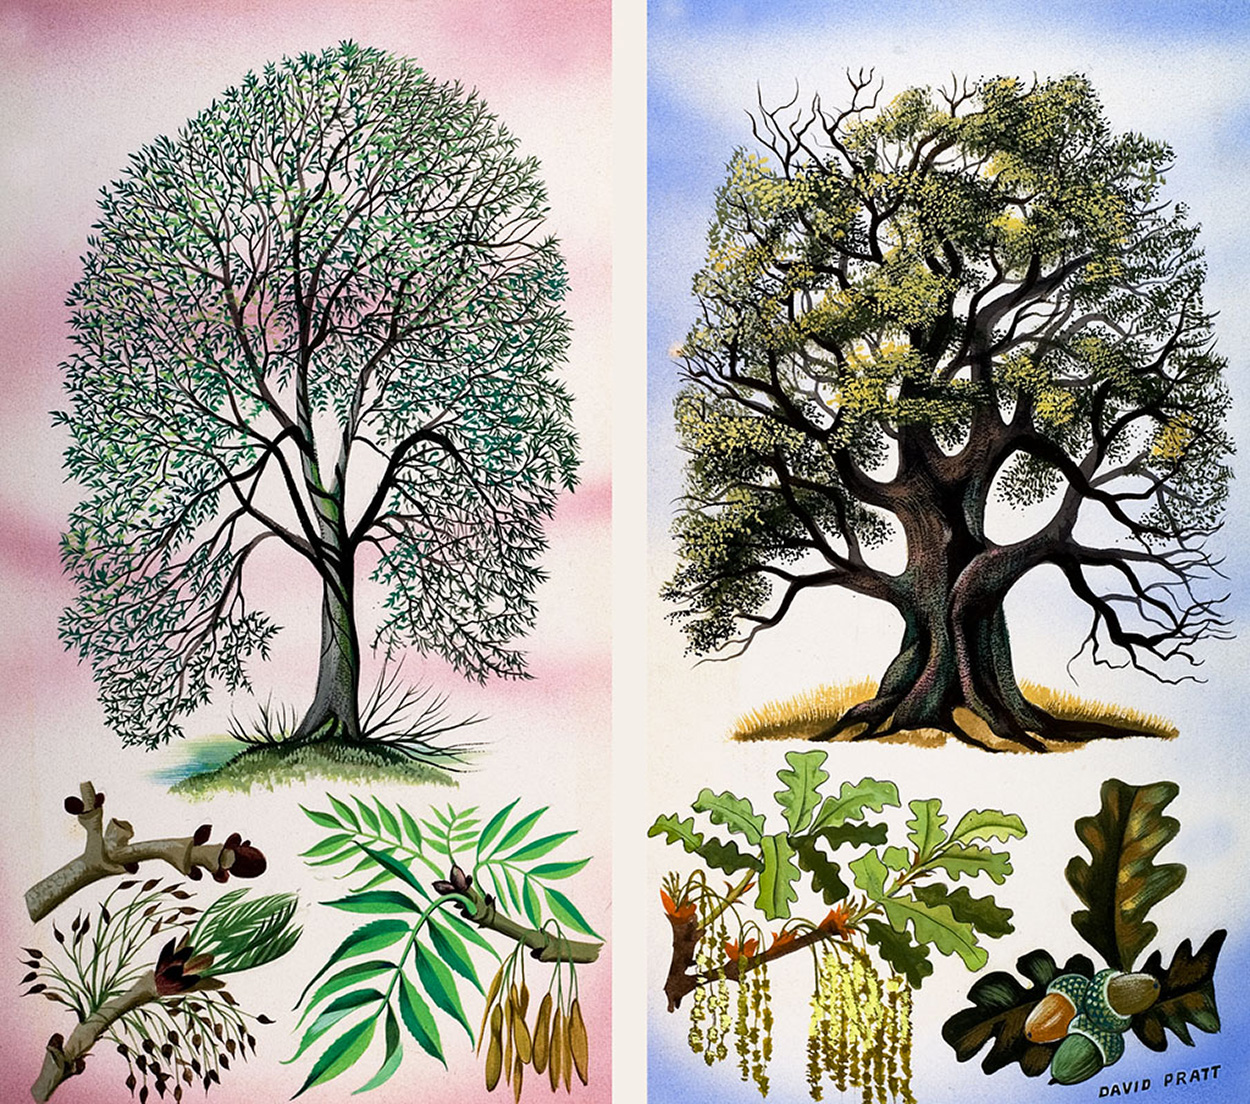 Ash and Oak Trees (Original) (Signed) art by David Pratt Art at The Illustration Art Gallery